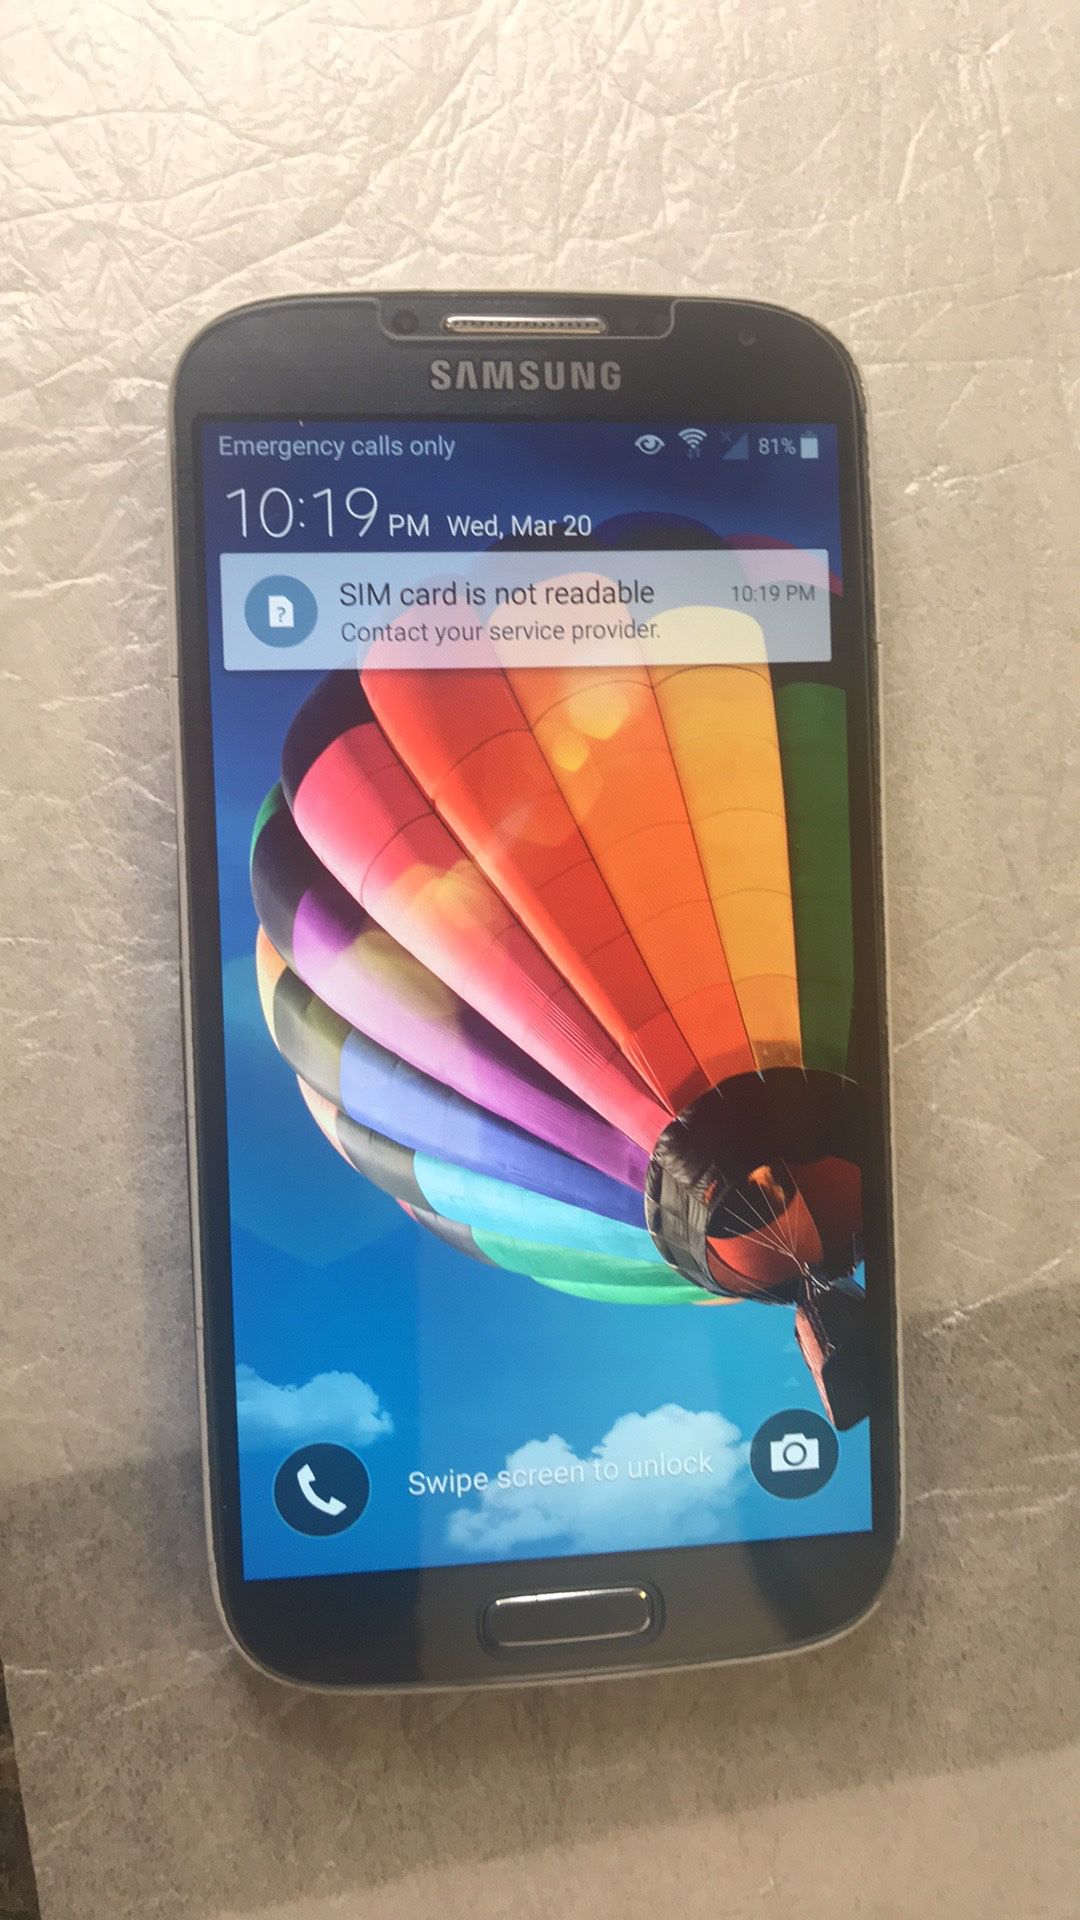 Samsung Galaxy S4 Cell Phone Verizon (Cricket?)